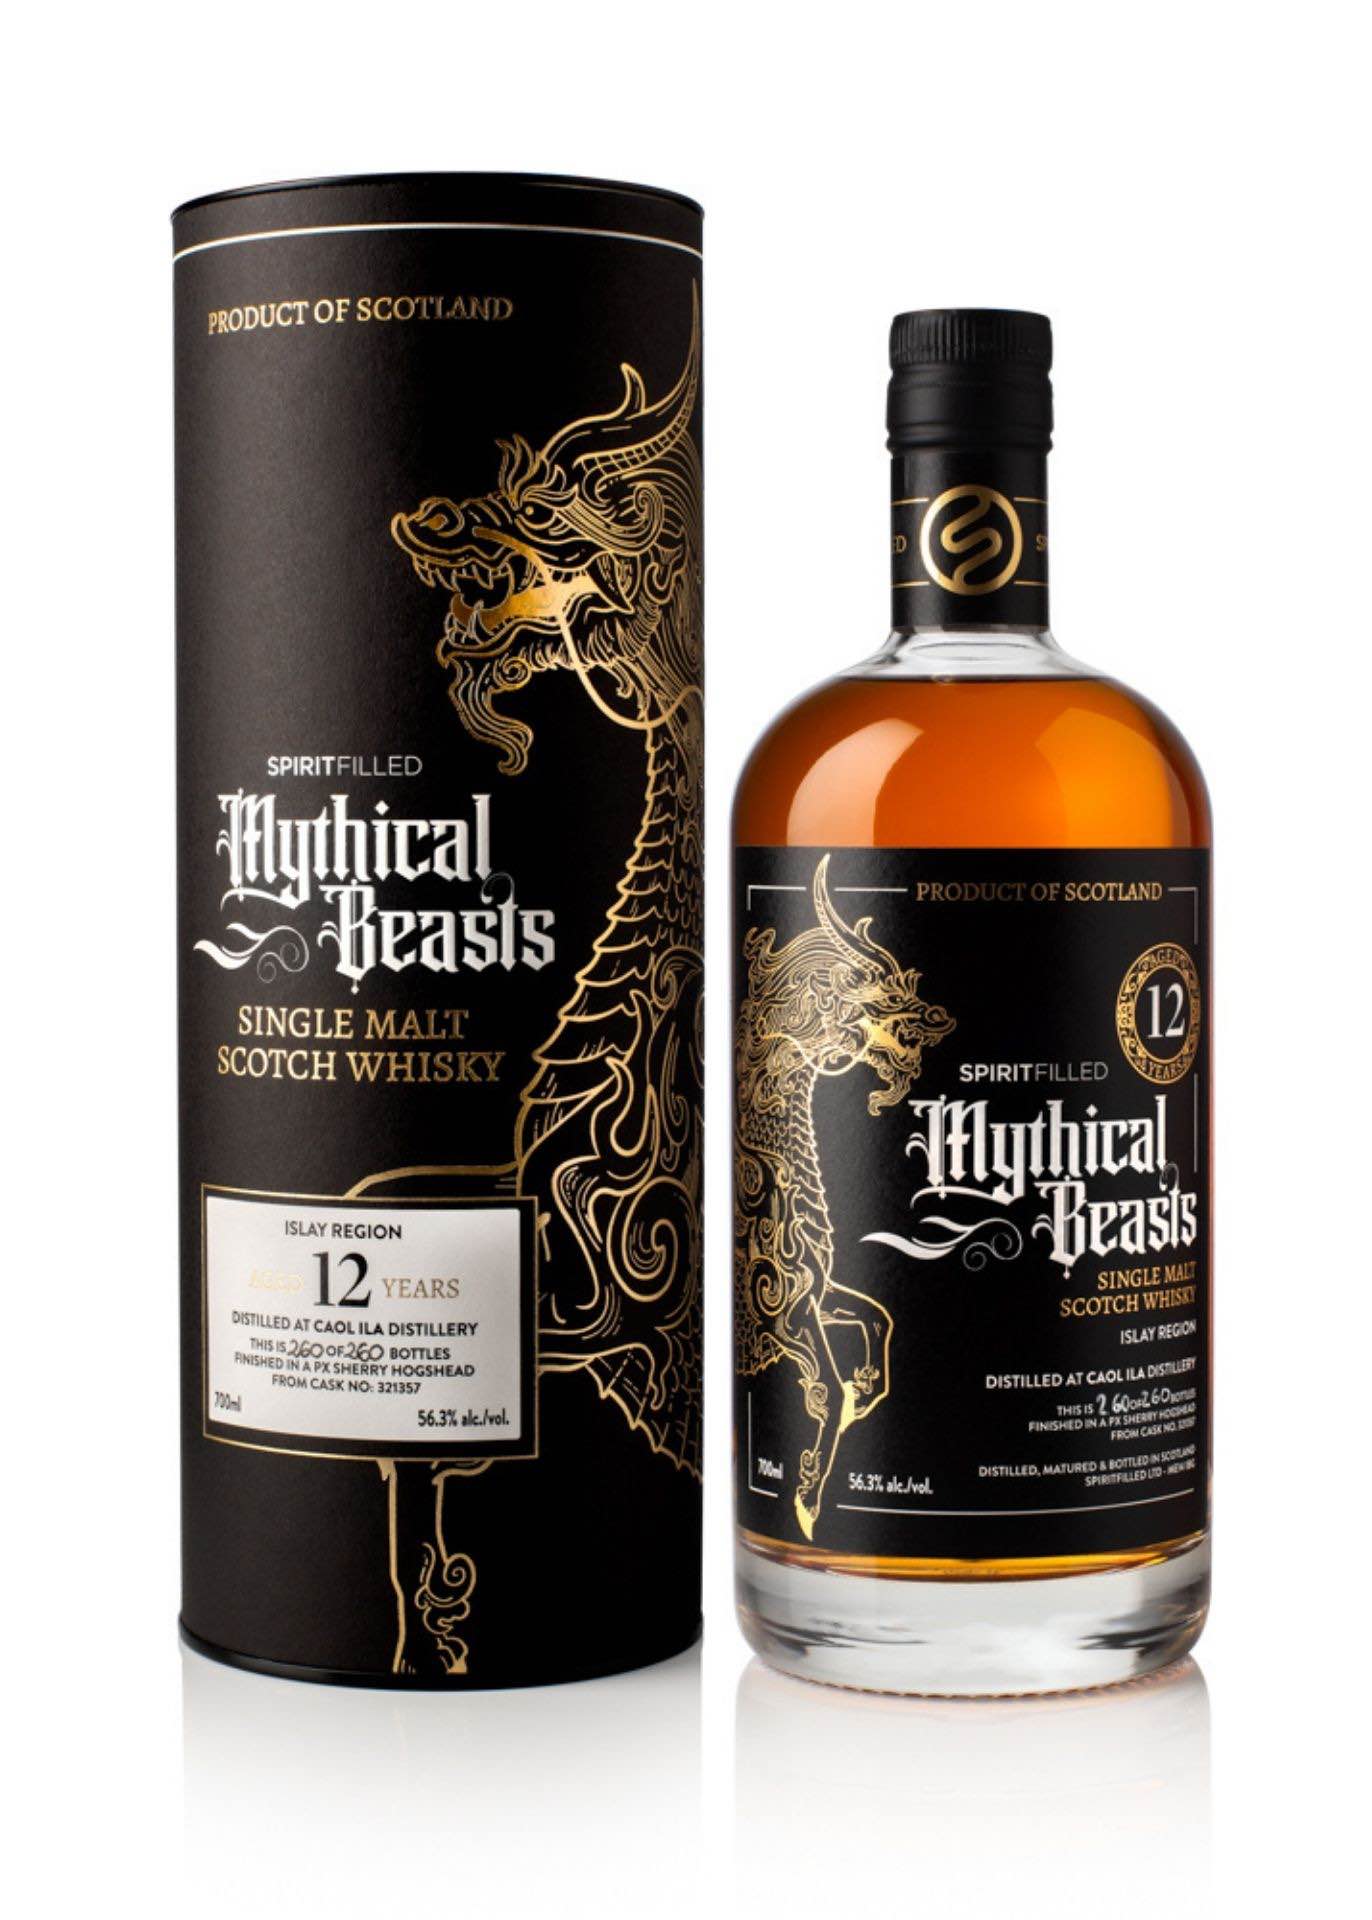 Spiritfilled Mythical Beasts Caol Ila 12 Year Old Single Malt Scotch Whisky